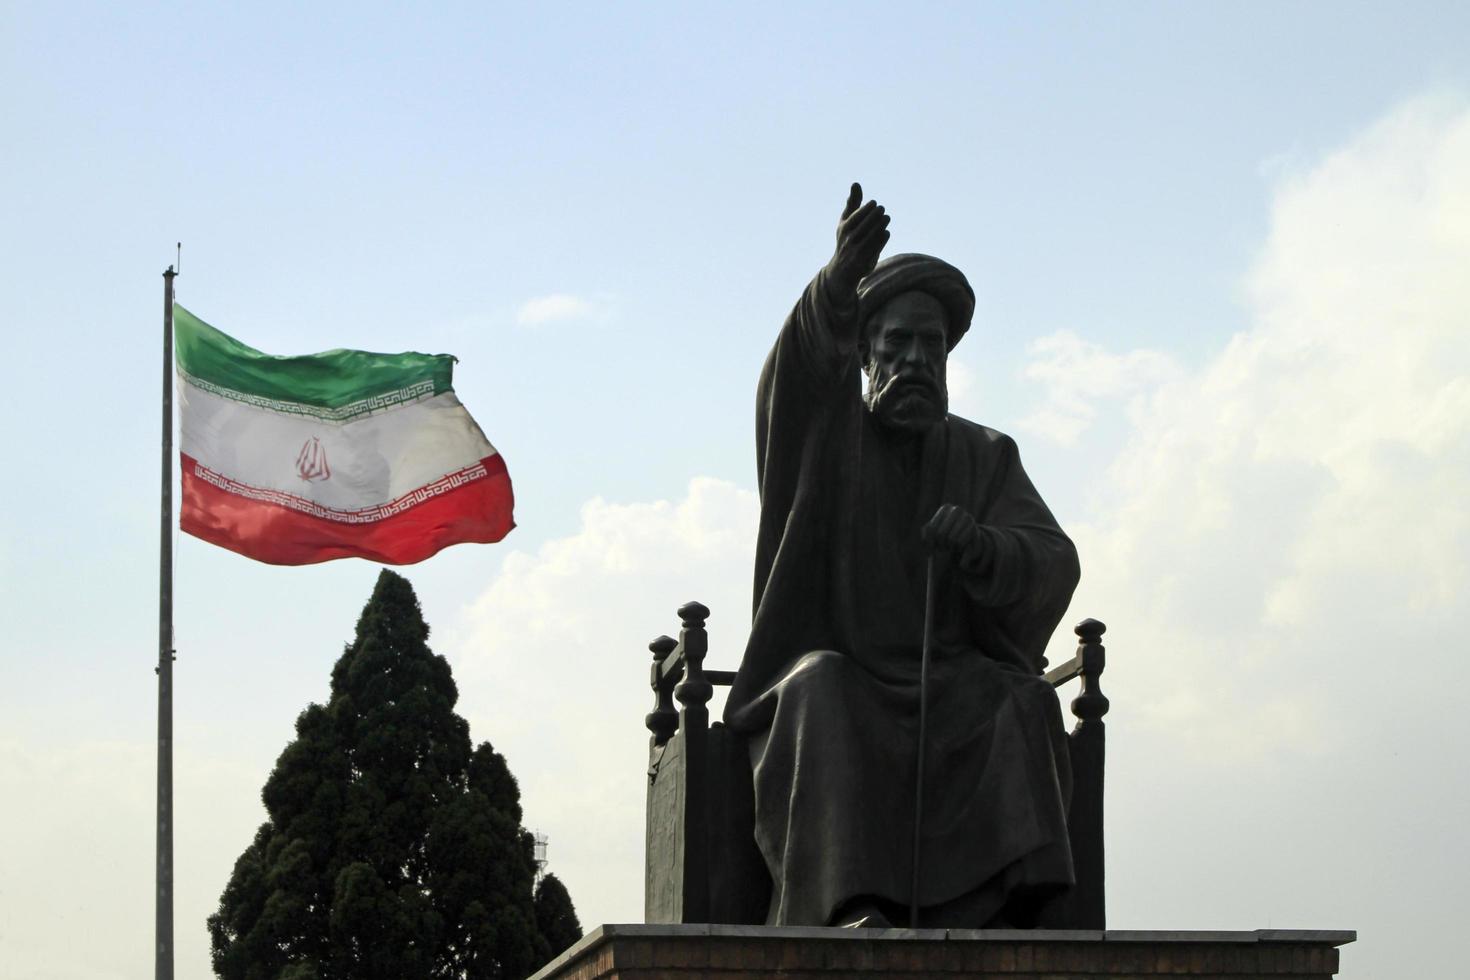 Tehran, Iran - June 10, 2018 - A large Iranian flag waving in the wind behind a statue of Khomeini in Tehran, Iran photo